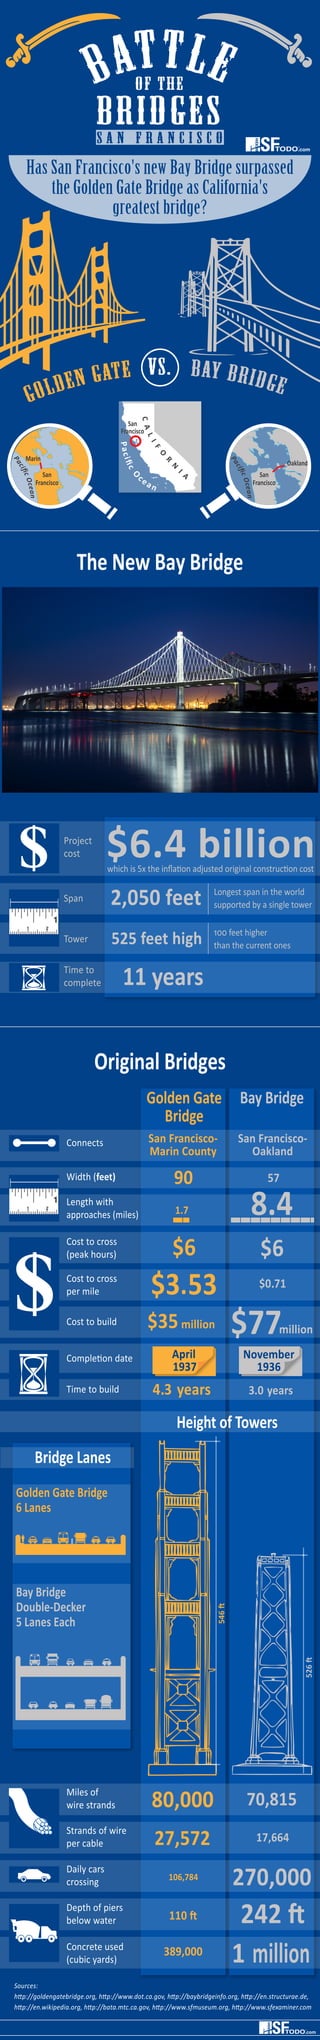 Golden Gate Bridge Facts